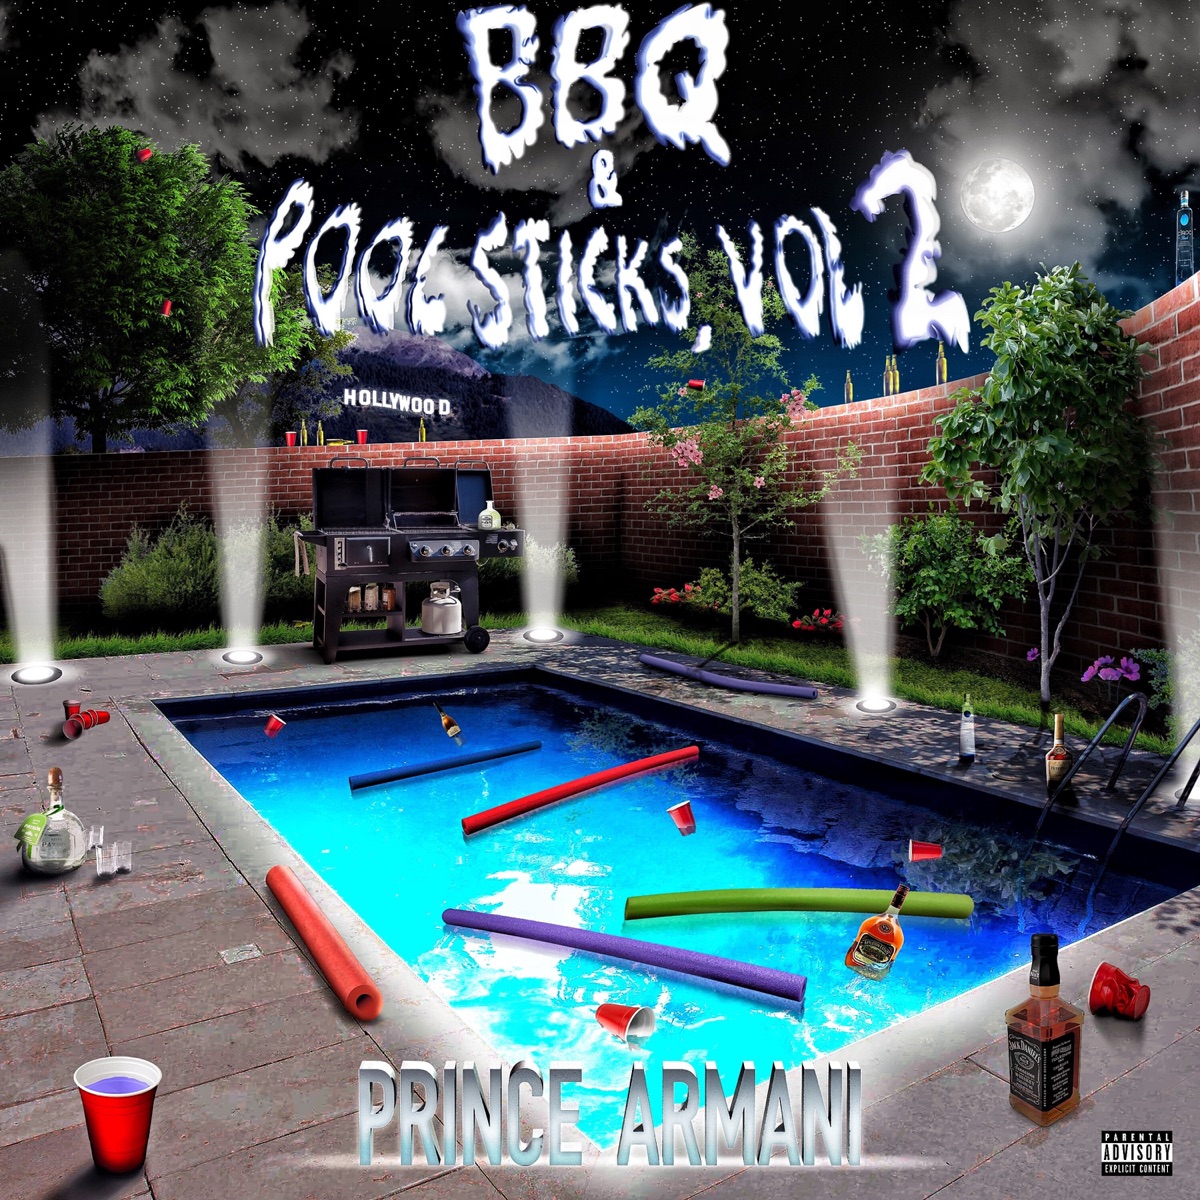 BBQ & Pool Sticks,  - EP by Prince Armani on Apple Music